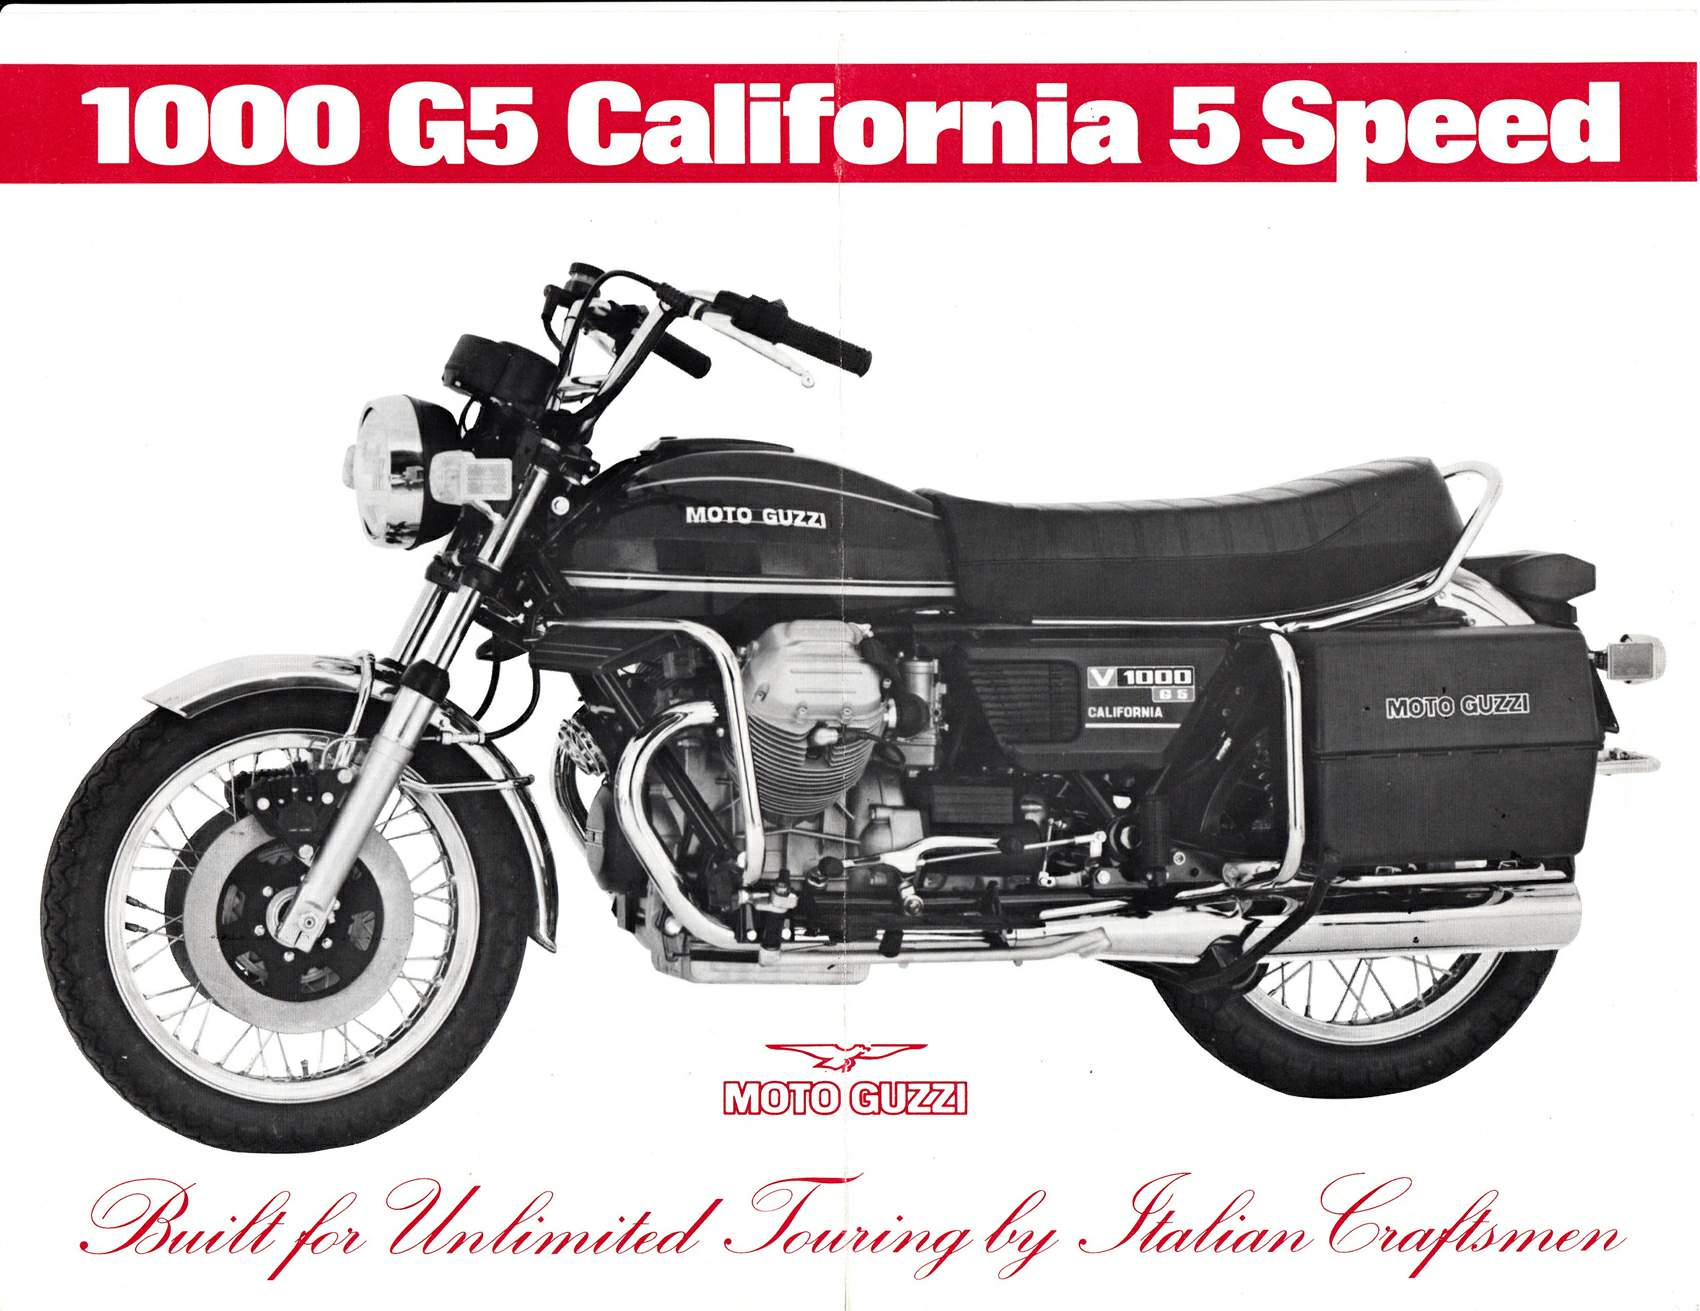 Moto Guzzi V 1000G5 California (1980-) especificaciones técnicas